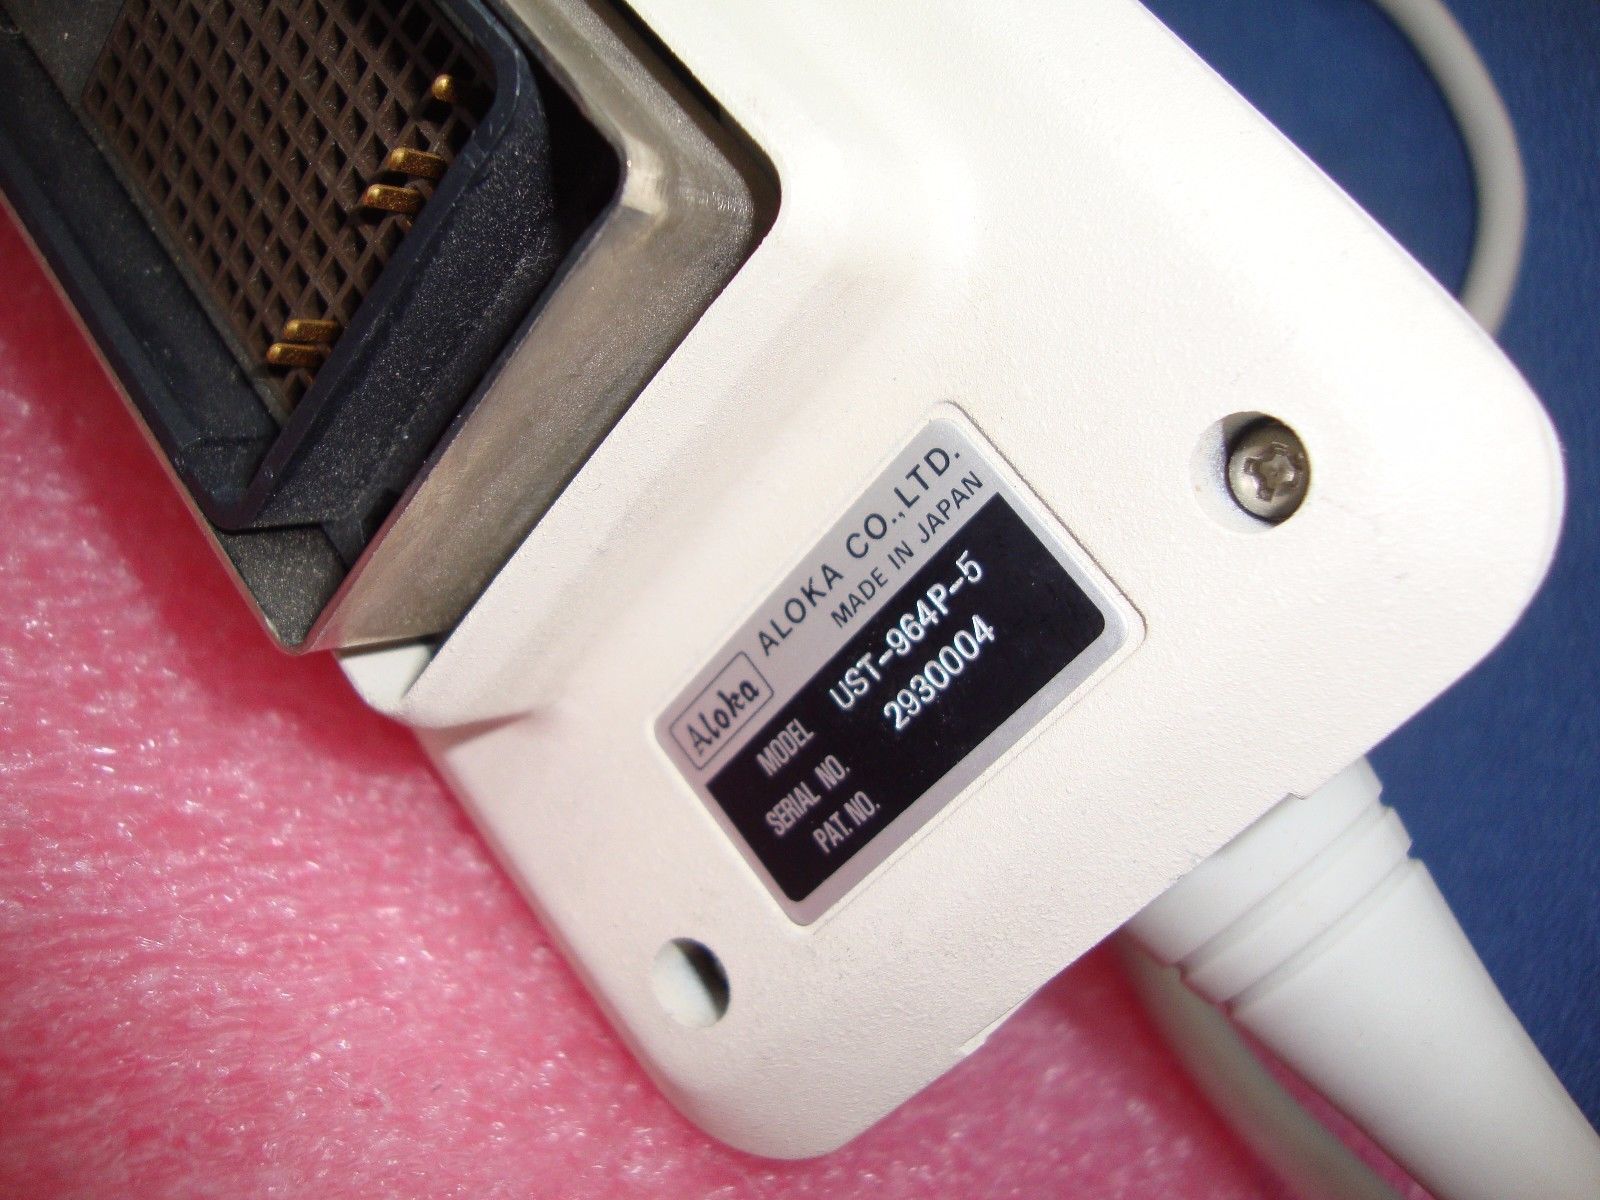 ALOKA  UST-964P-5 Ultrasound Probe 5 MHz DIAGNOSTIC ULTRASOUND MACHINES FOR SALE